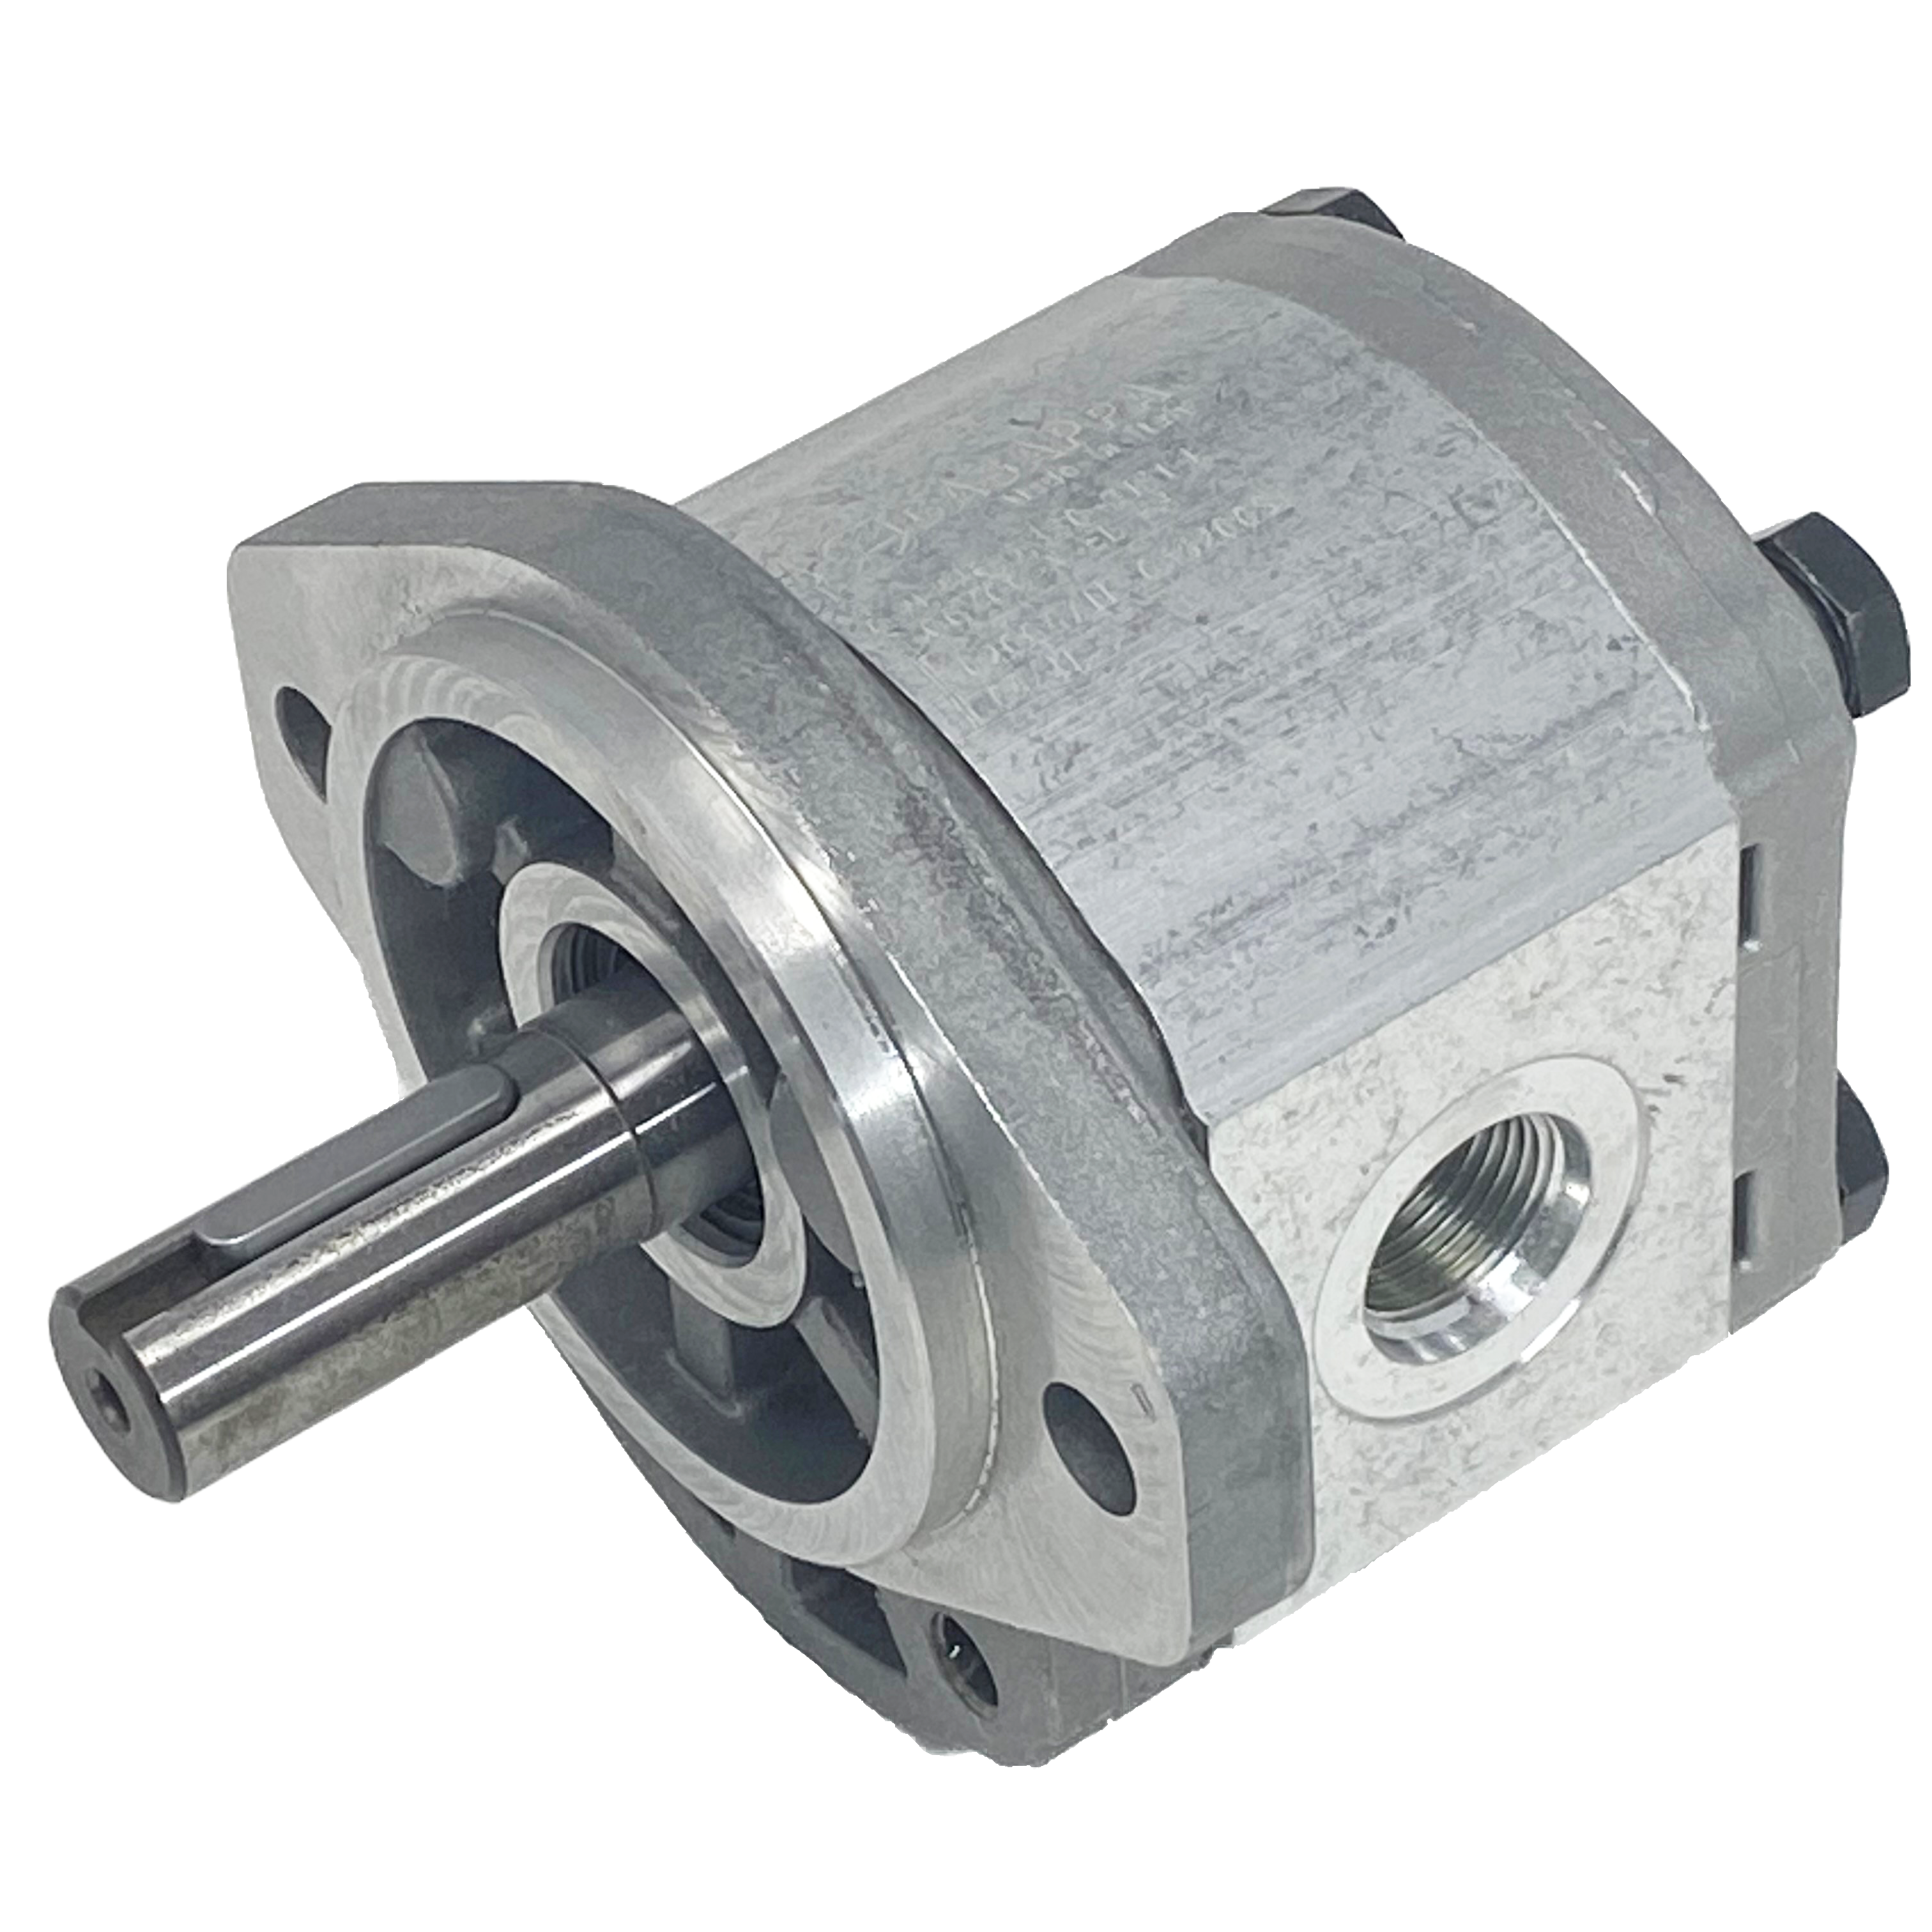 PLM20.11,2R0-49S1-LOC/OC-N-EL : Casappa Polaris Gear Motor, 11.23cc, 3625psi Rated, 3500RPM, Reversible Rear External Drain, 3/4" Bore x 3/16" Key Shaft, SAE A 2-Bolt Flange, 0.625 (5/8") #10 SAE Inlet, 0.625 (5/8") #10 SAE Outlet, Aluminum Body & Flange